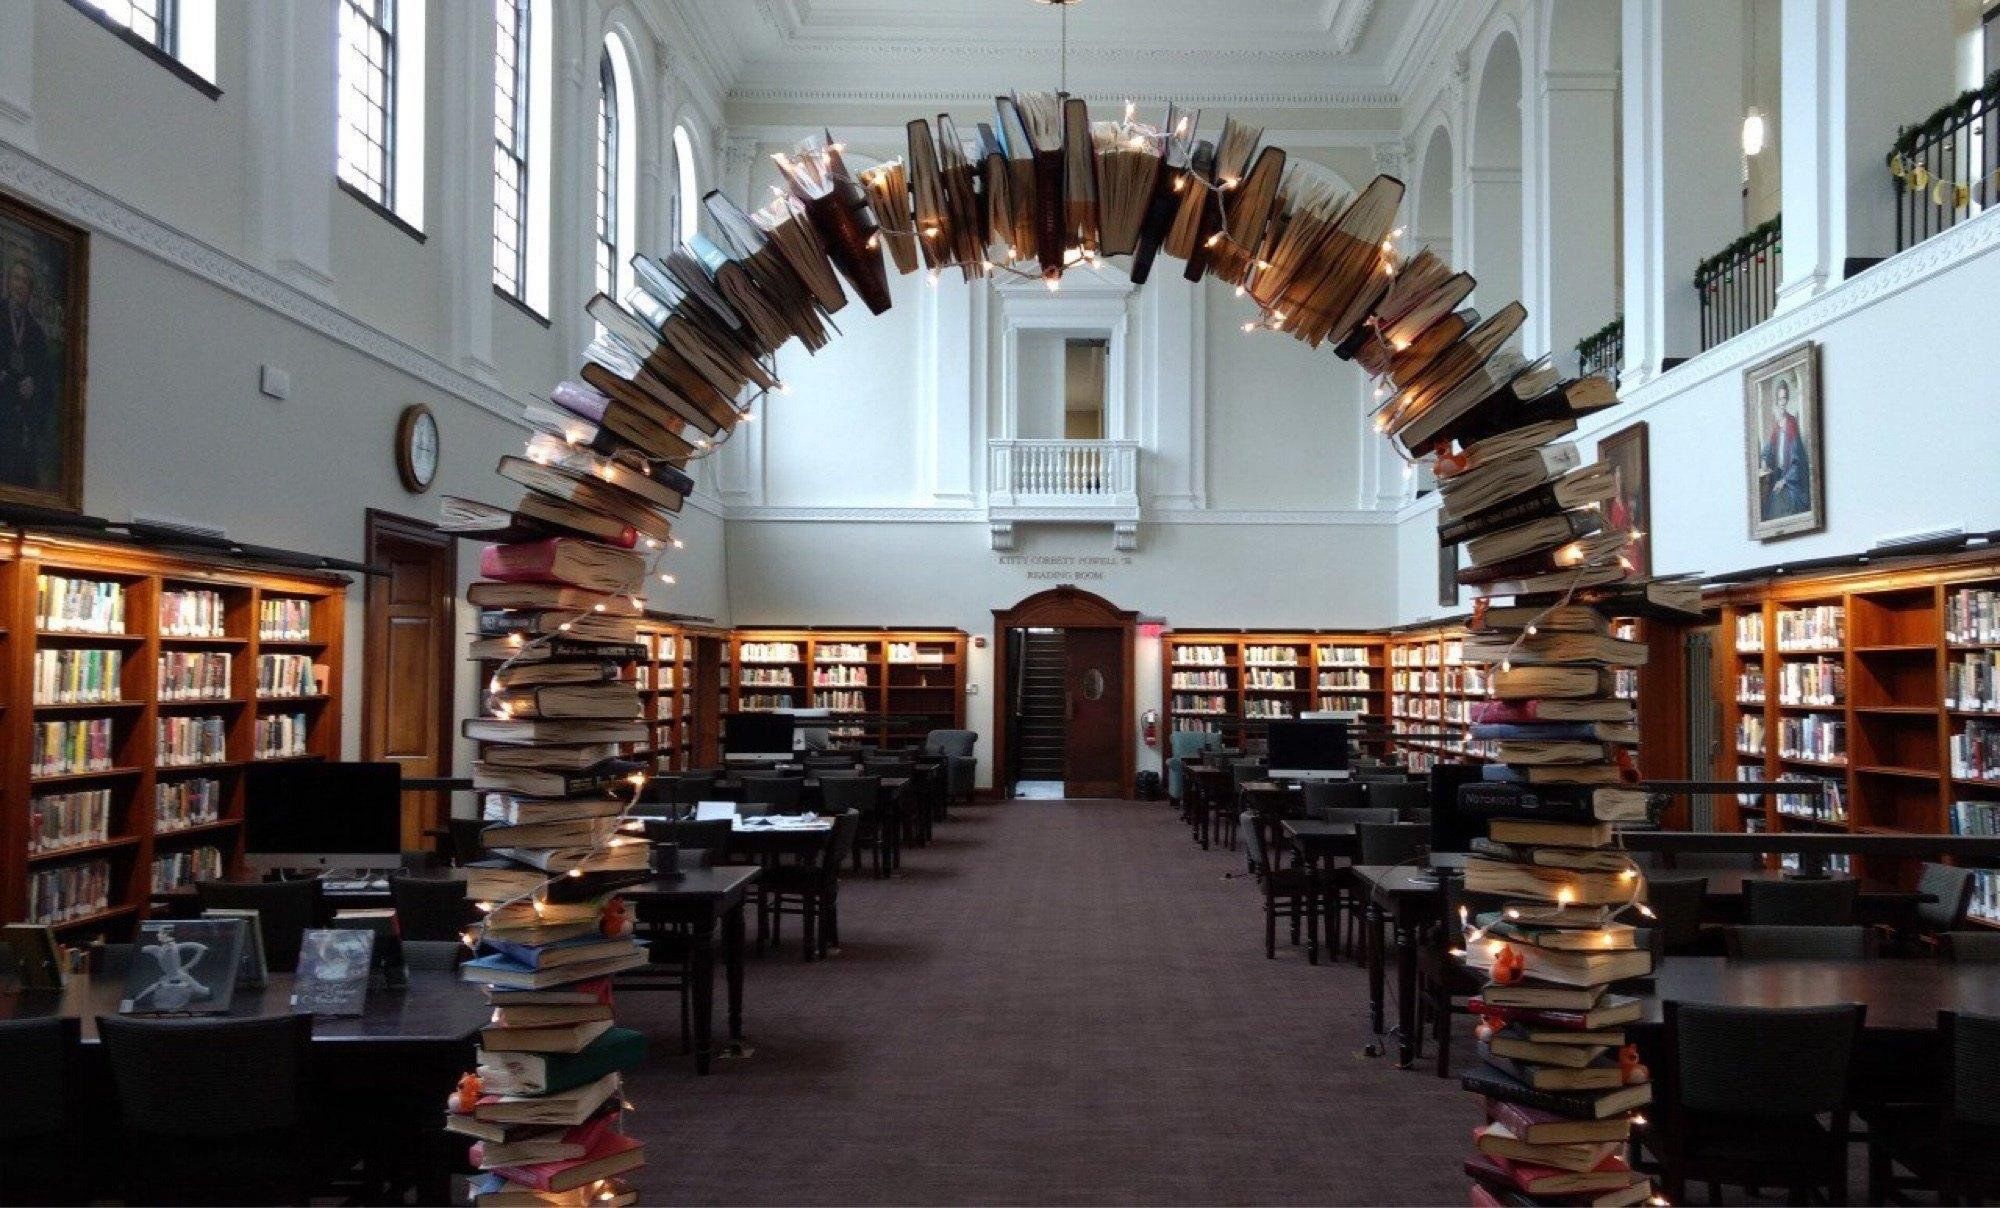 Compiled library. Красивая библиотека. Книгохранилище библиотеки. Современная библиотека.